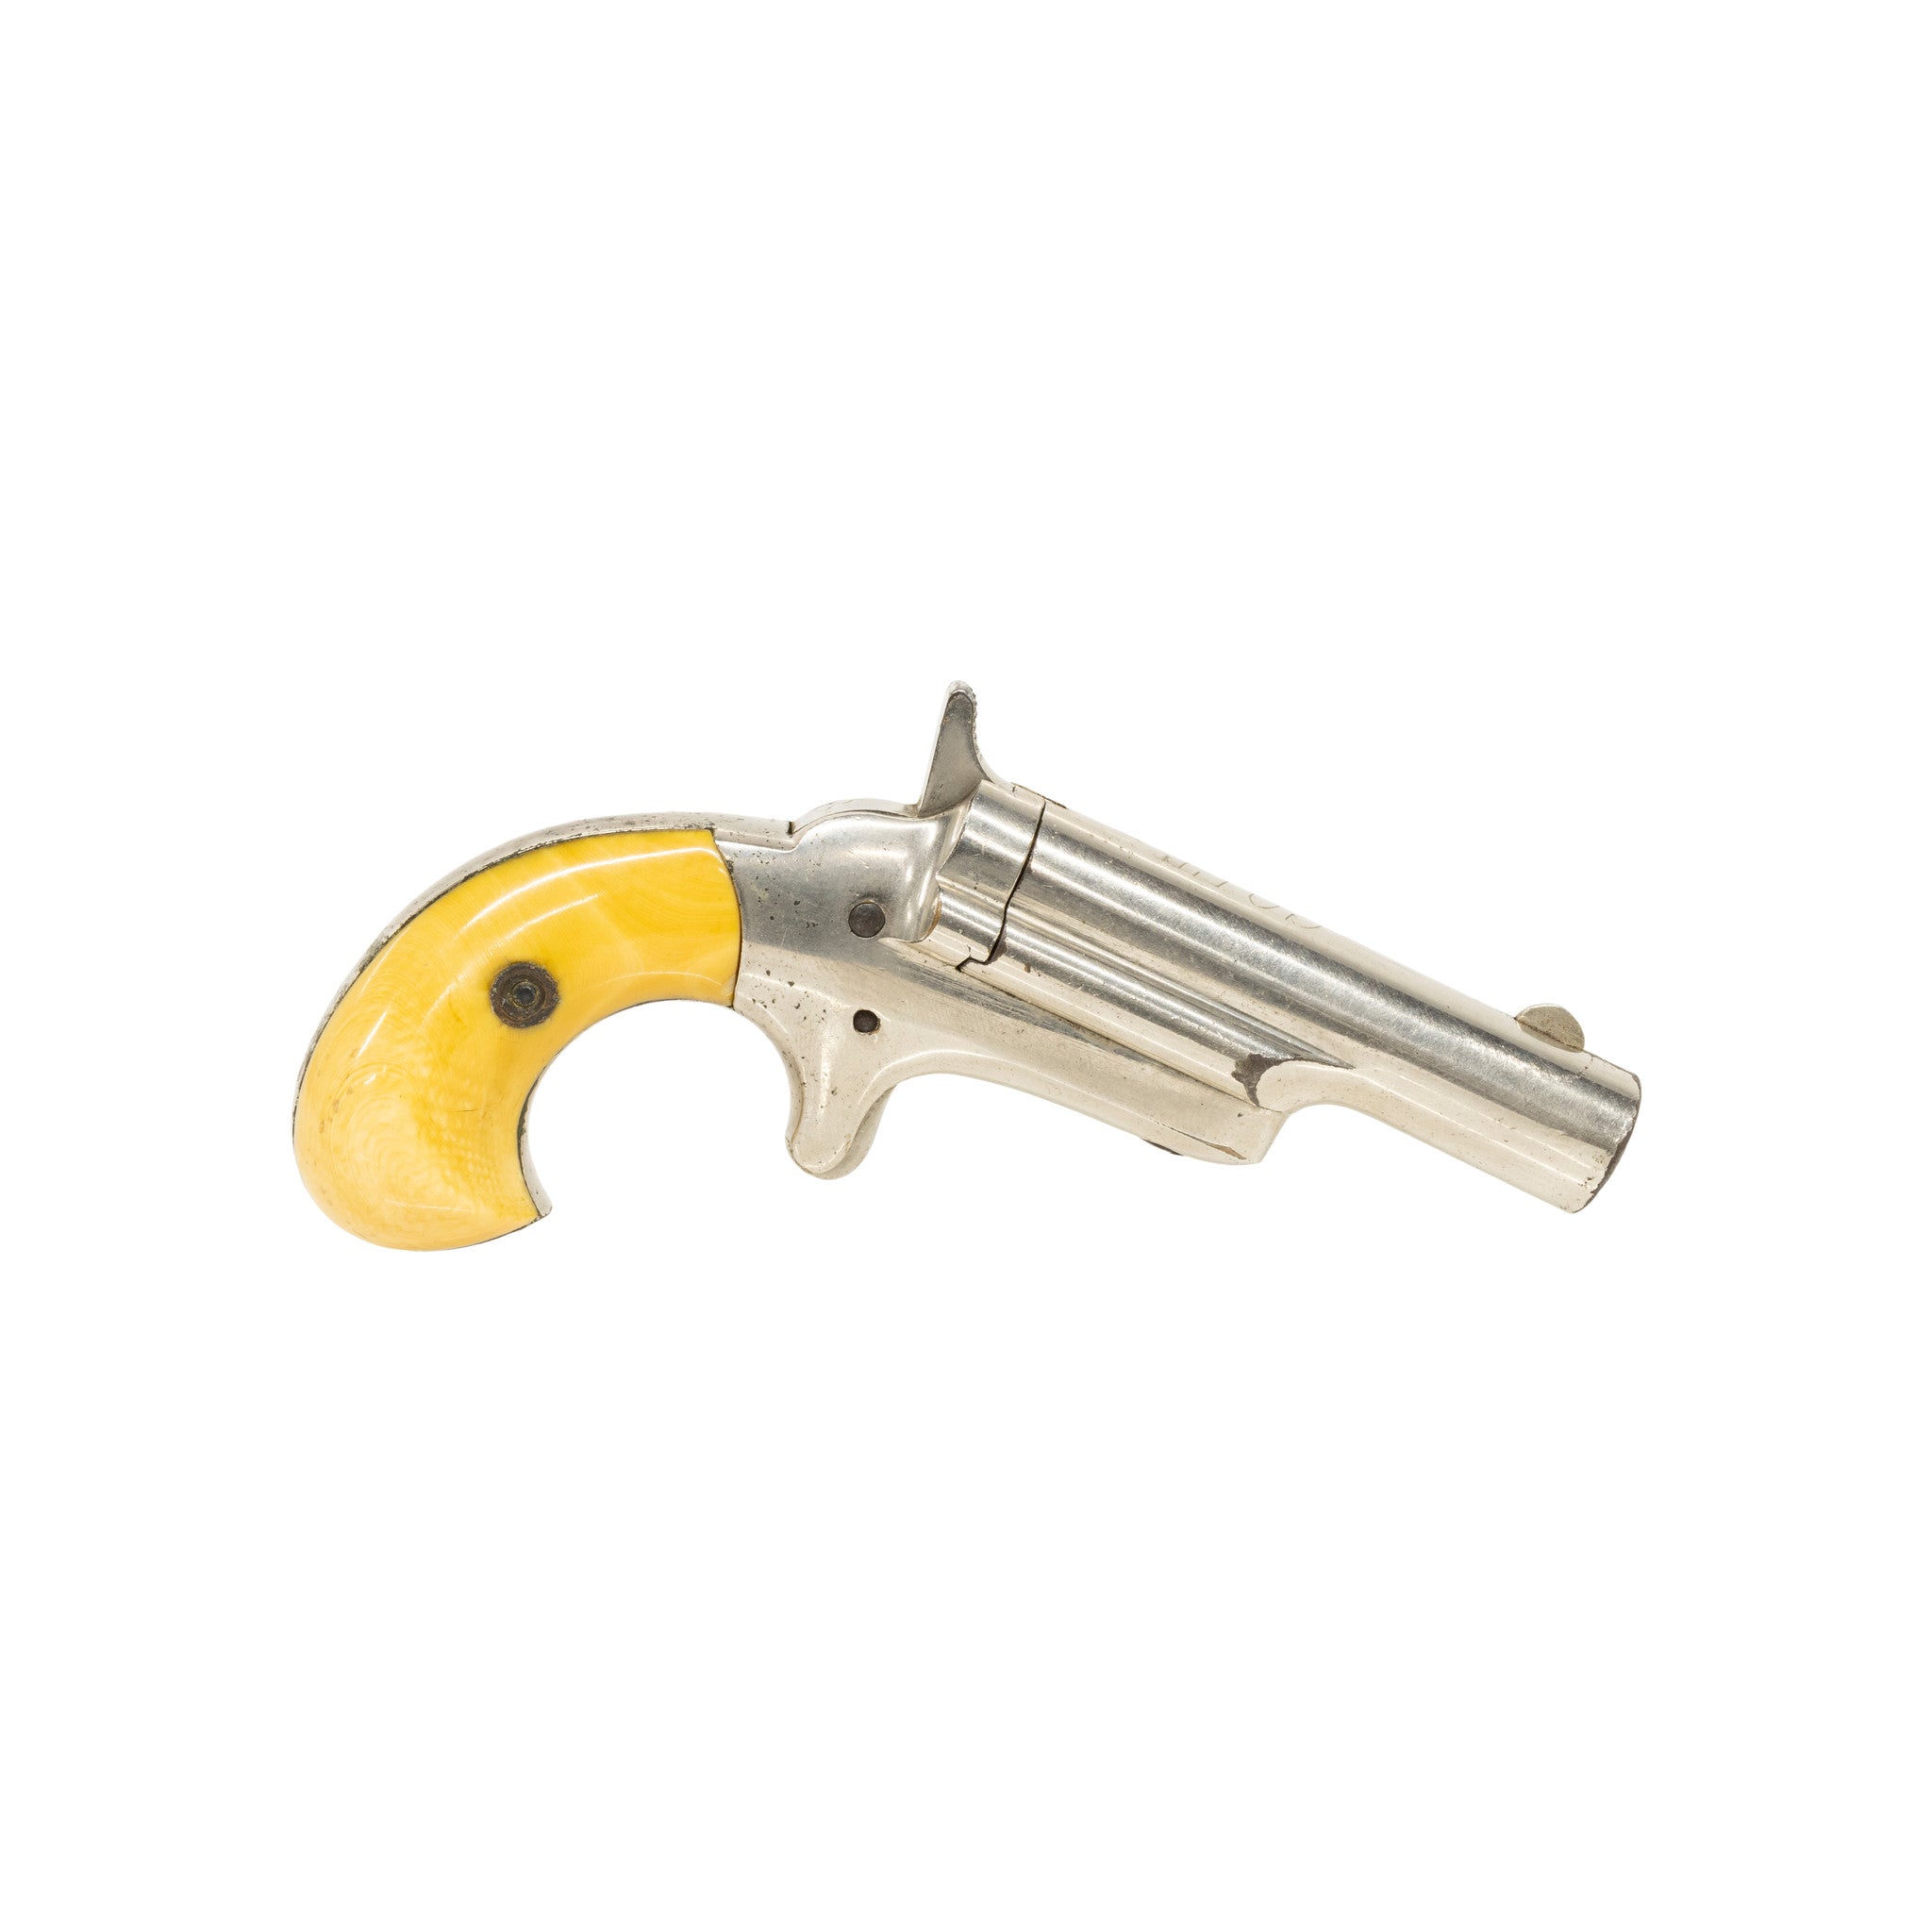 Cased Pair of Colt Third Model Derringer Pocket Pistols